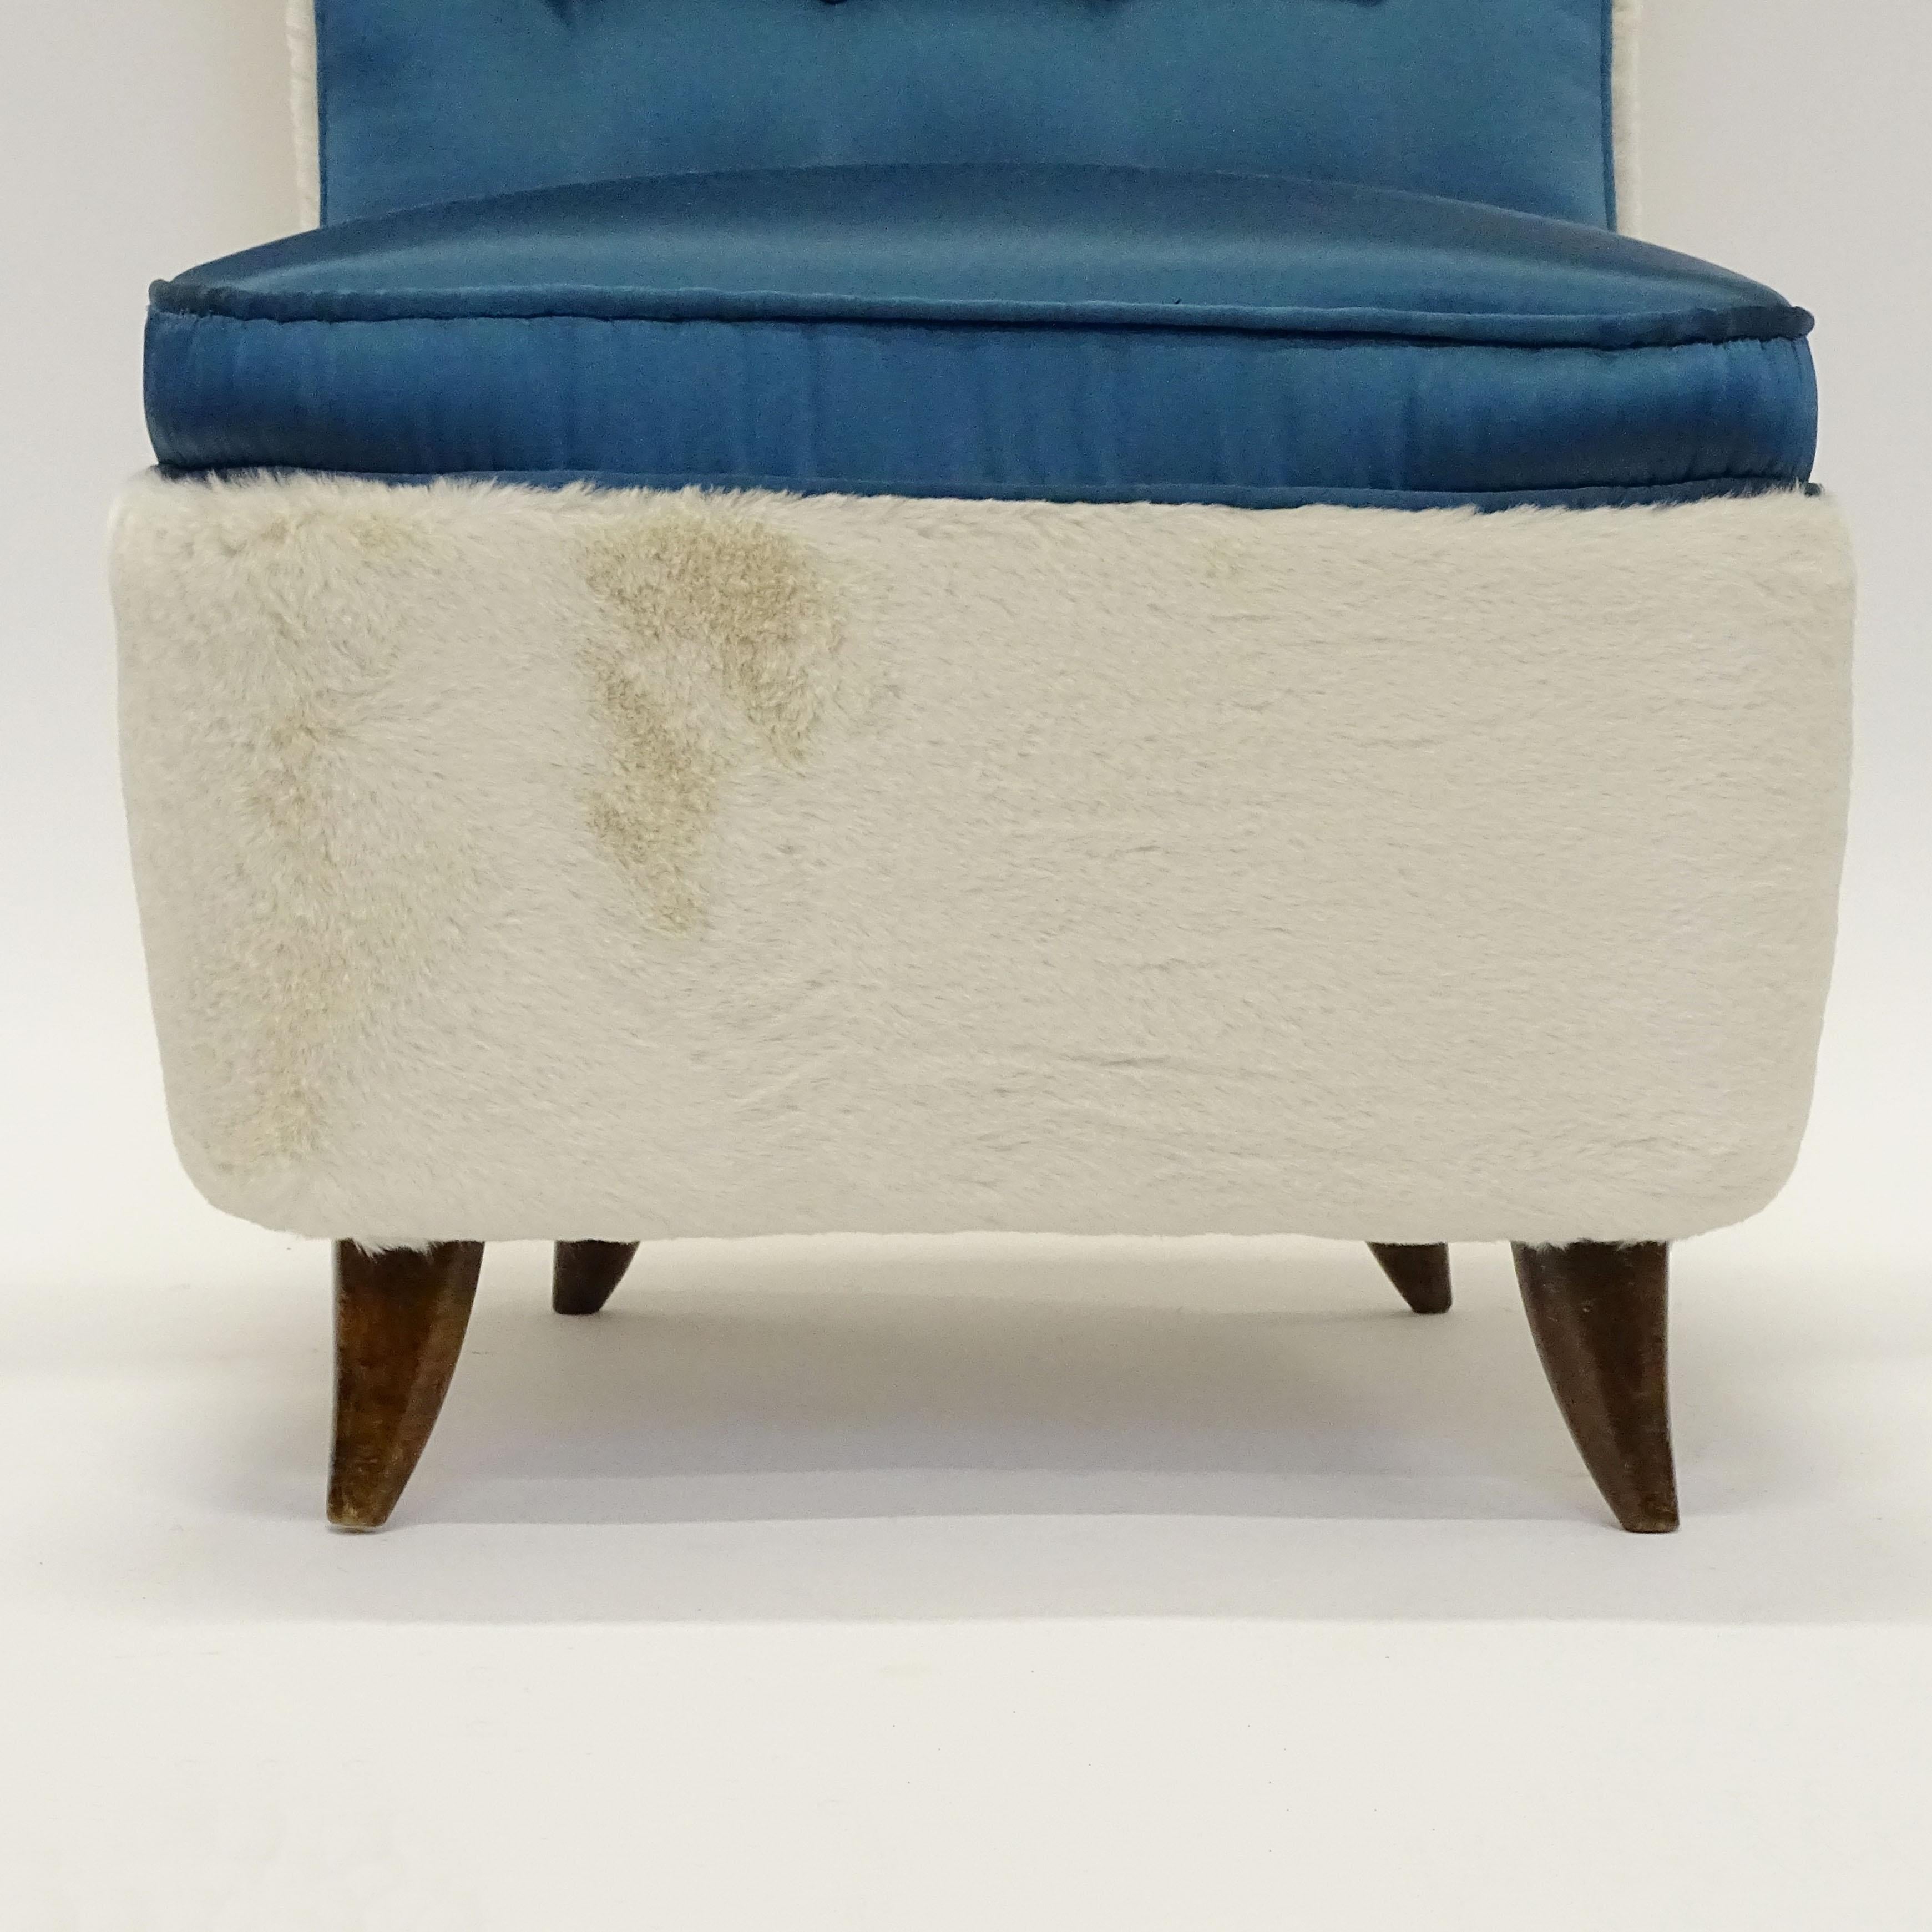 Italian Cesare Lacca Slipper Chair in Faux fur and Dark Blue Satin, Italy, 1950s For Sale